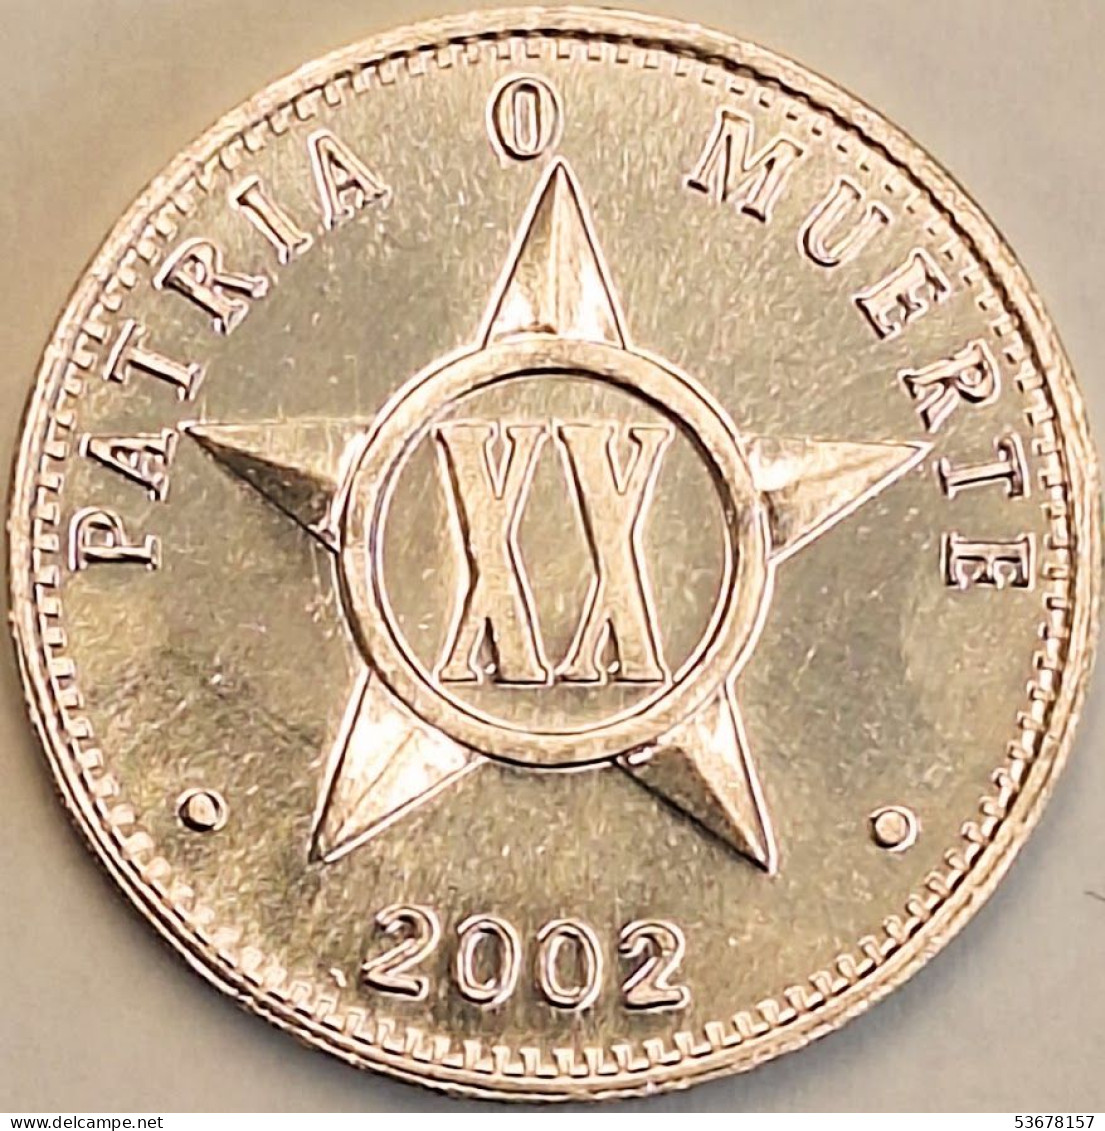 Cuba - 20 Centavos 2002, KM# 35.1 (#3577) - Kuba